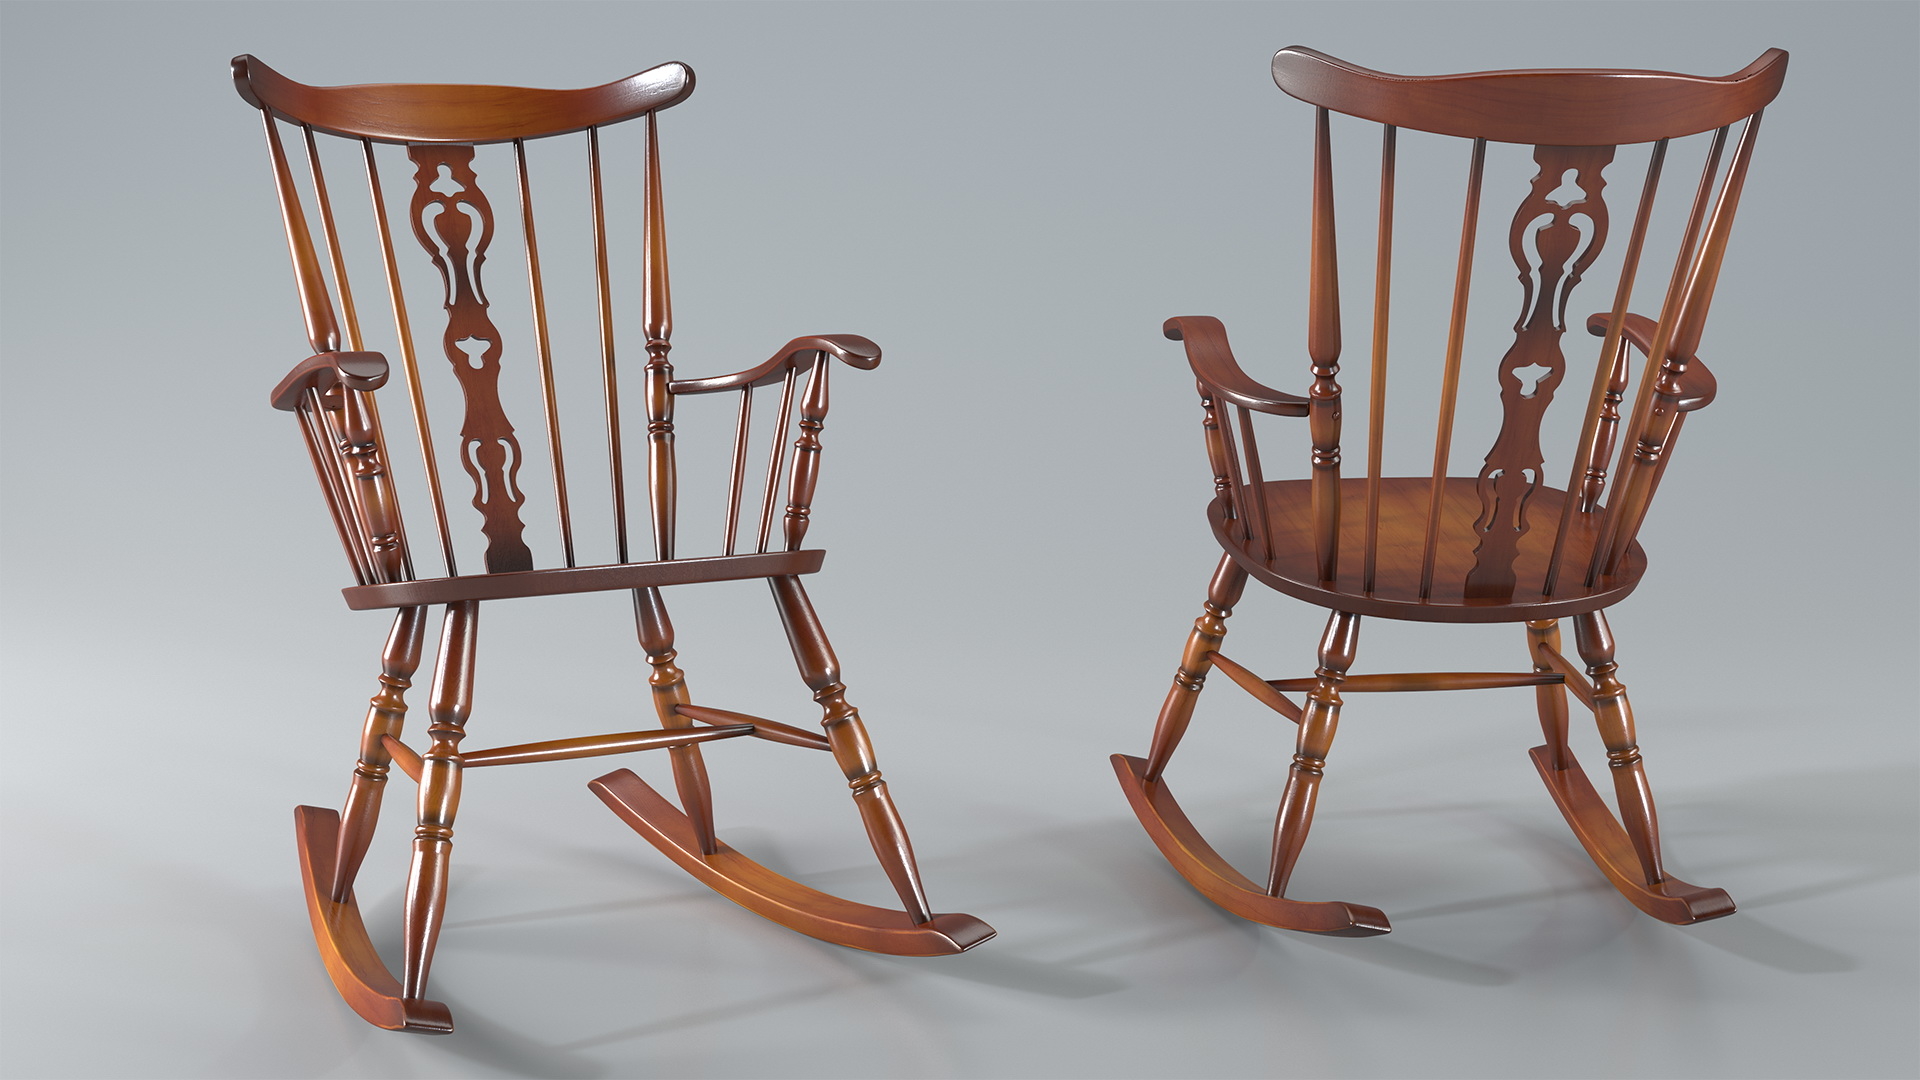 Vintage Wooden Rocking Chair Model Turbosquid 1511507